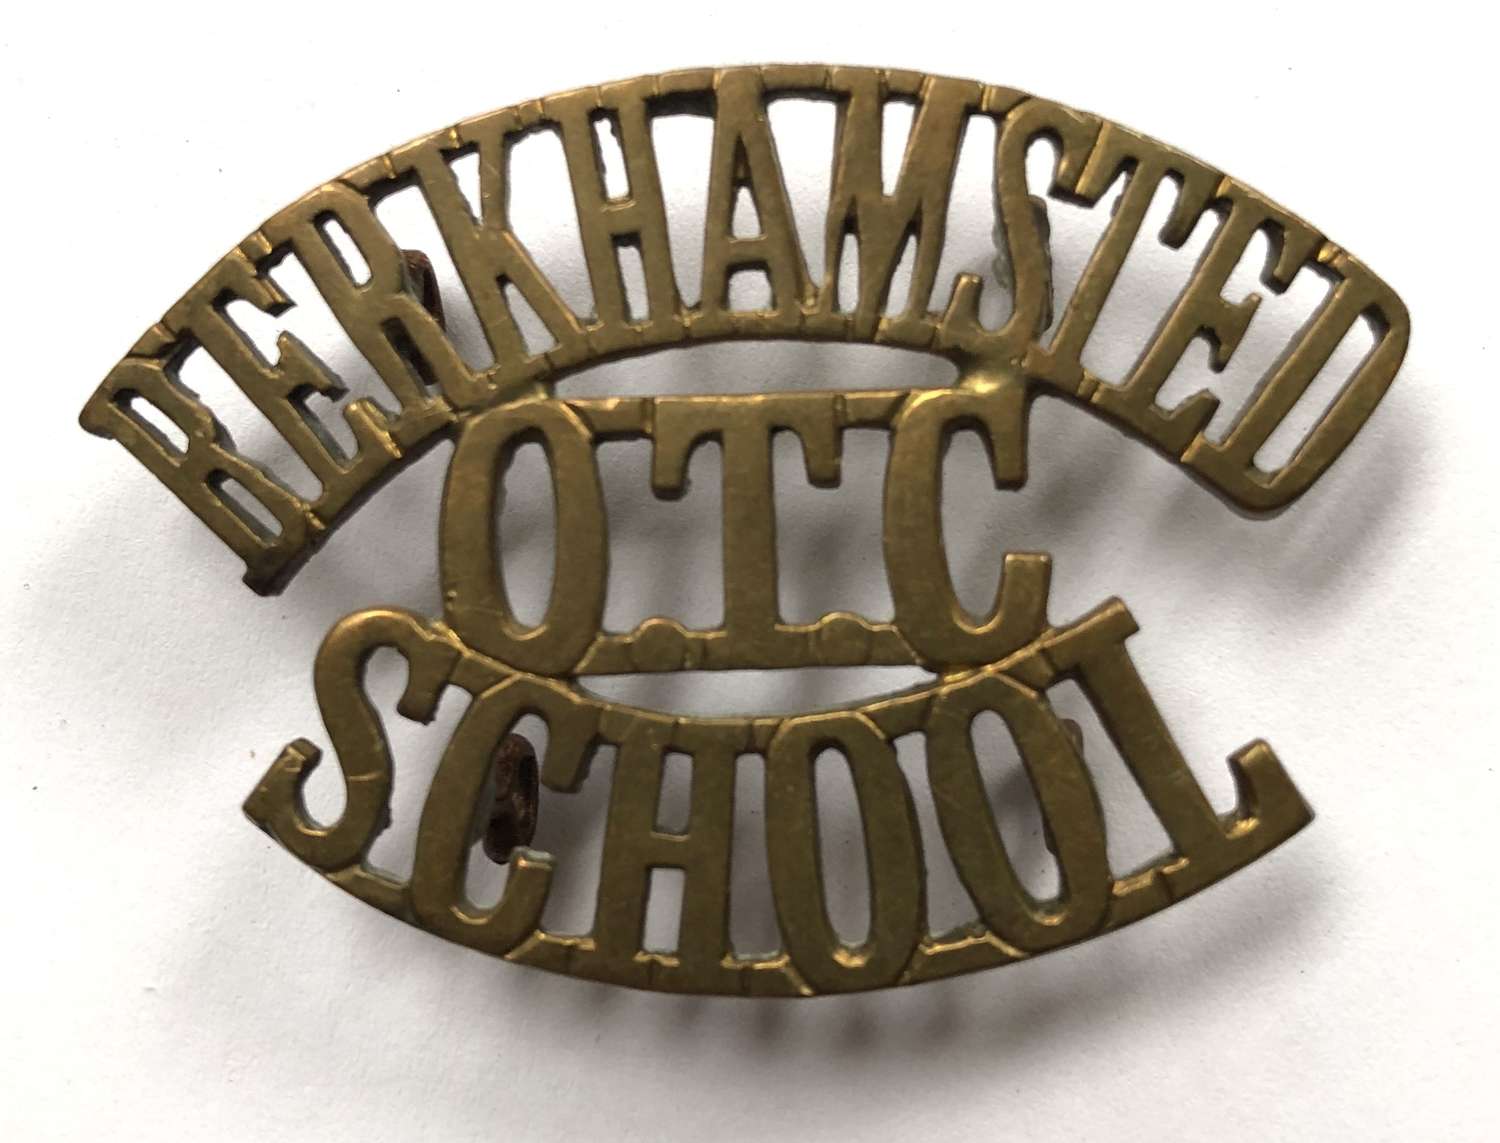 BERKHAMSTED / OTC / SCHOOL Hertfordhire shoulder title c1908-40